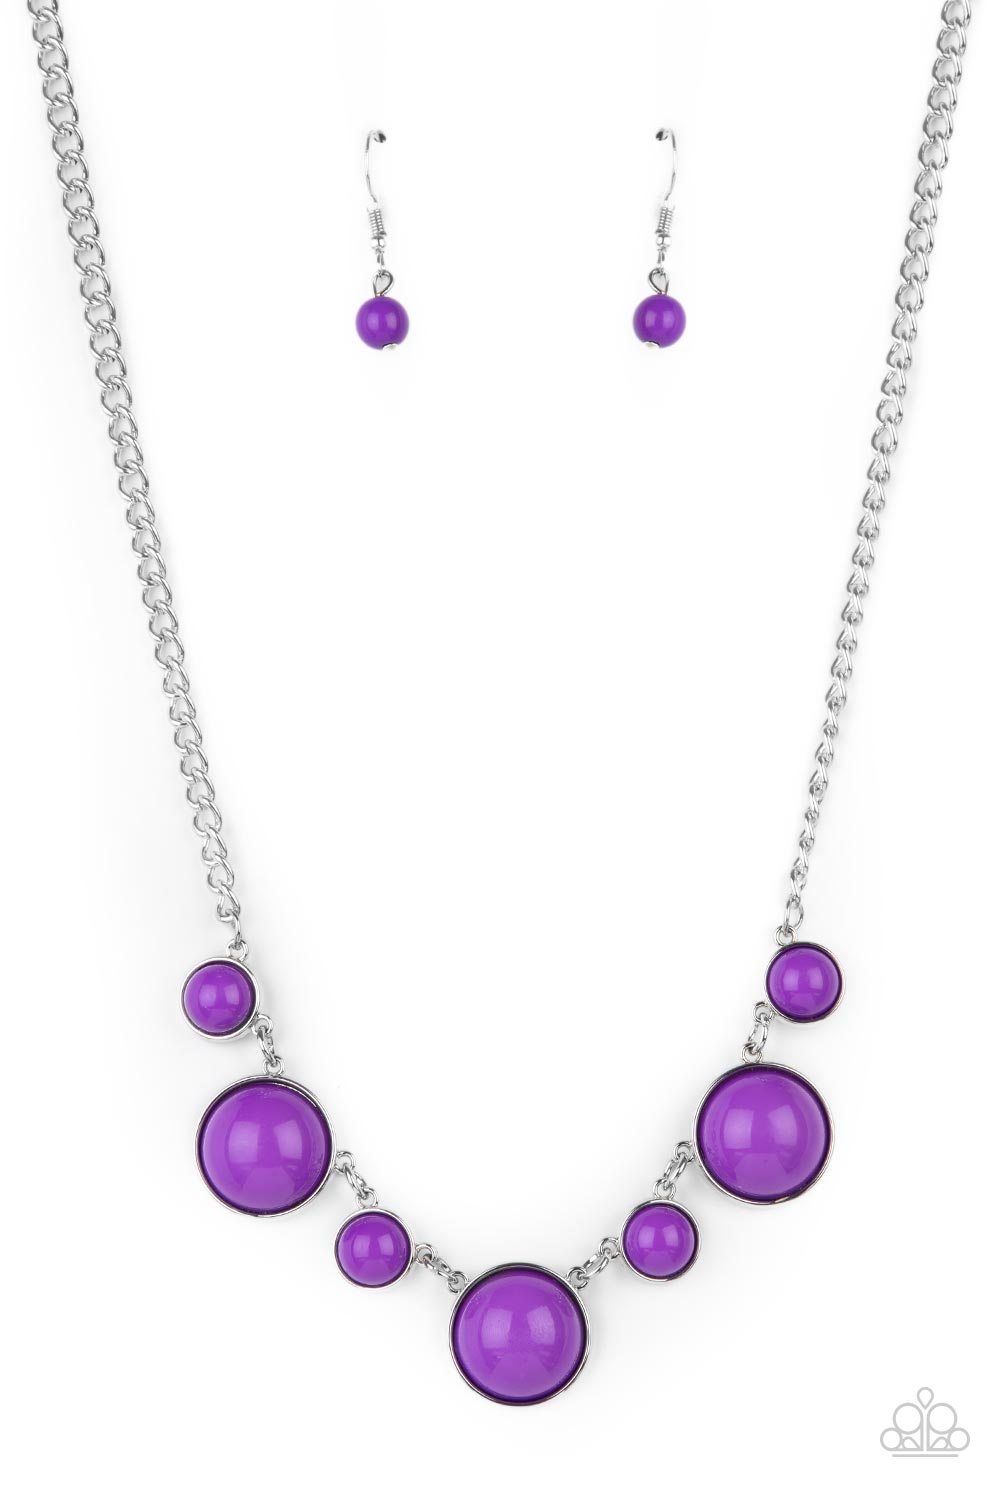 Prismatically POP-tastic - Purple Necklace freeshipping - JewLz4u Gemstone Gallery